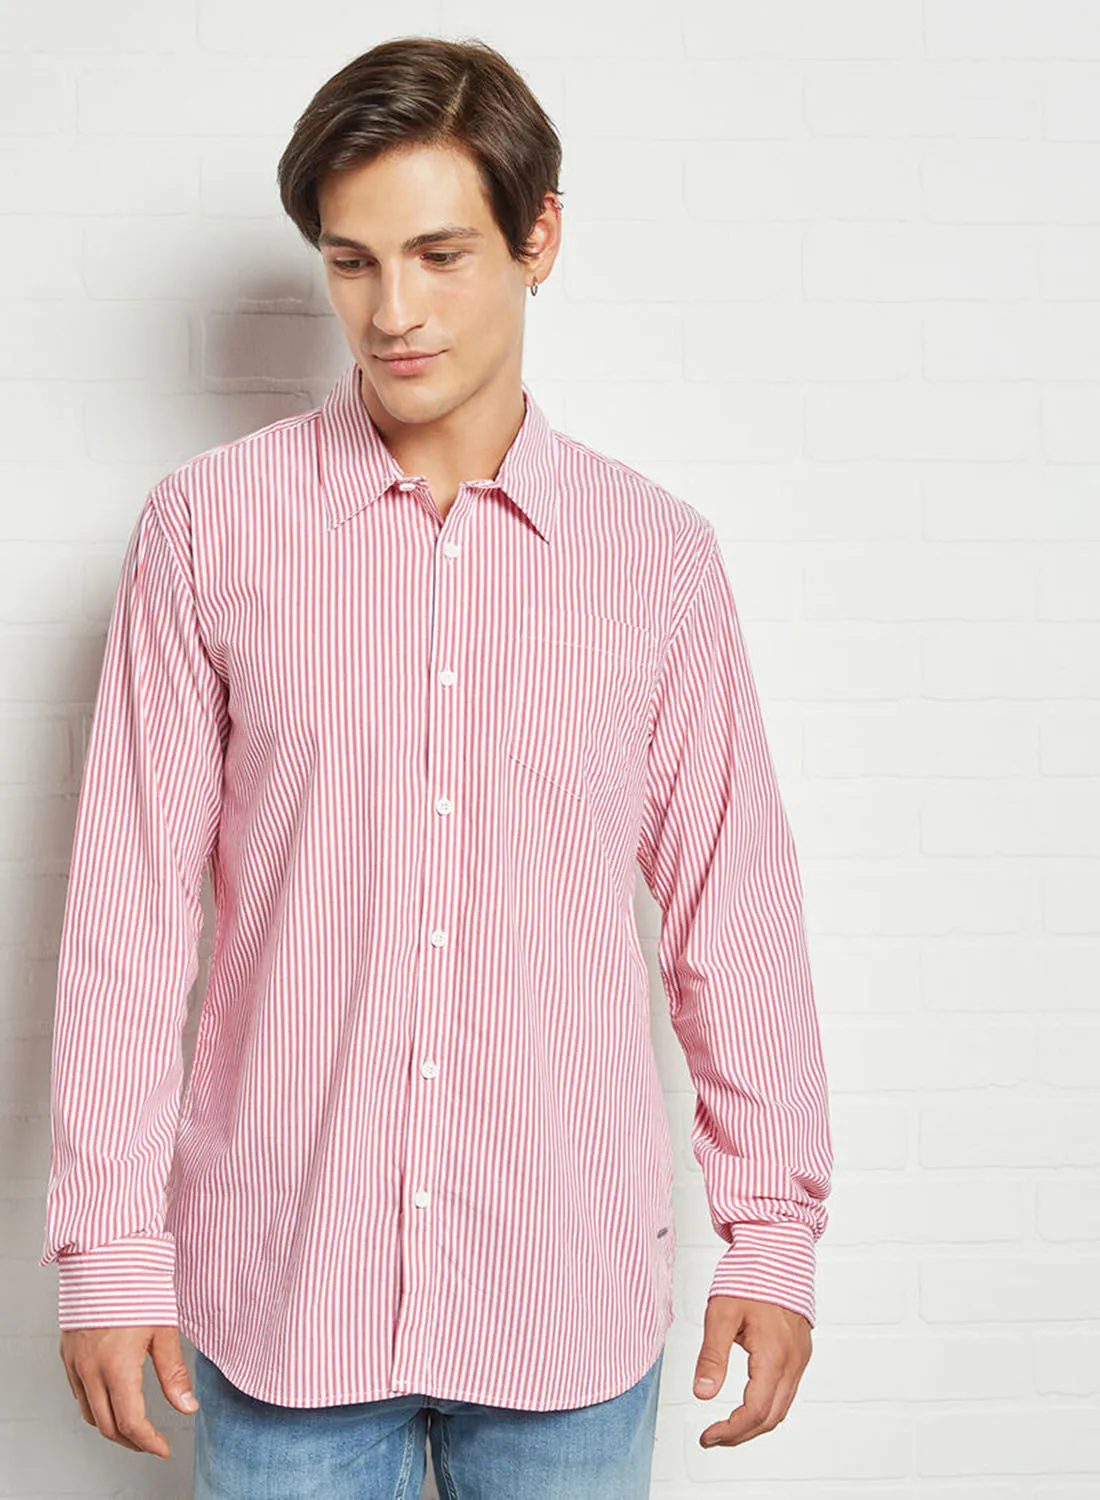 ABOF Stripes Printed Regular Fit Collared Neck Shirt Pink/White